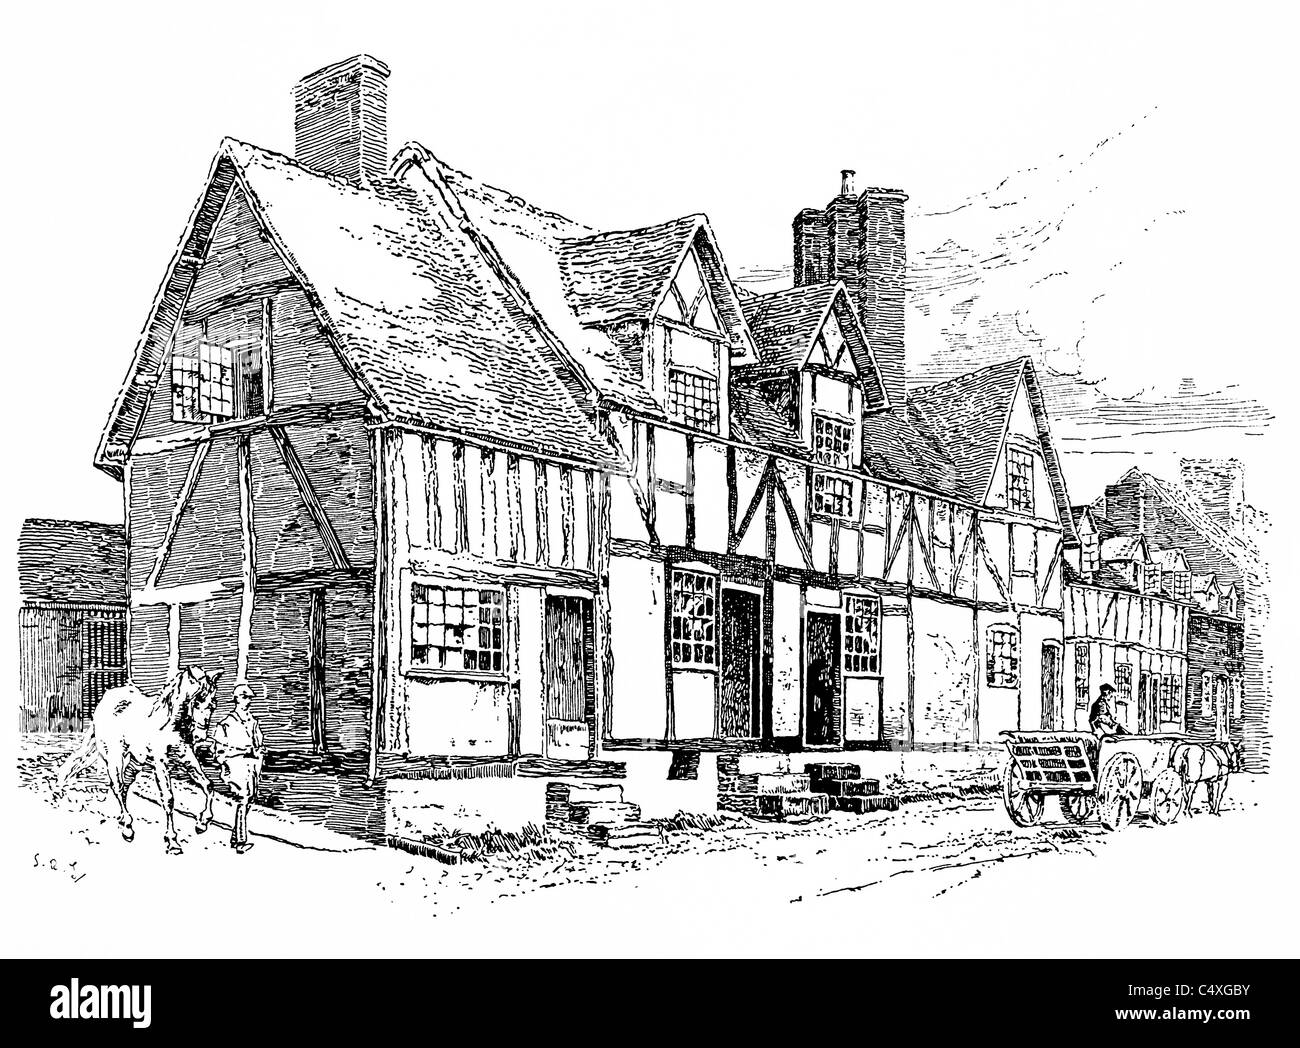 Chaddesley Corbett, Worcestershire - plume et encre illustration de 'Old English Country Cottages' par Charles Holme, 1906. Banque D'Images